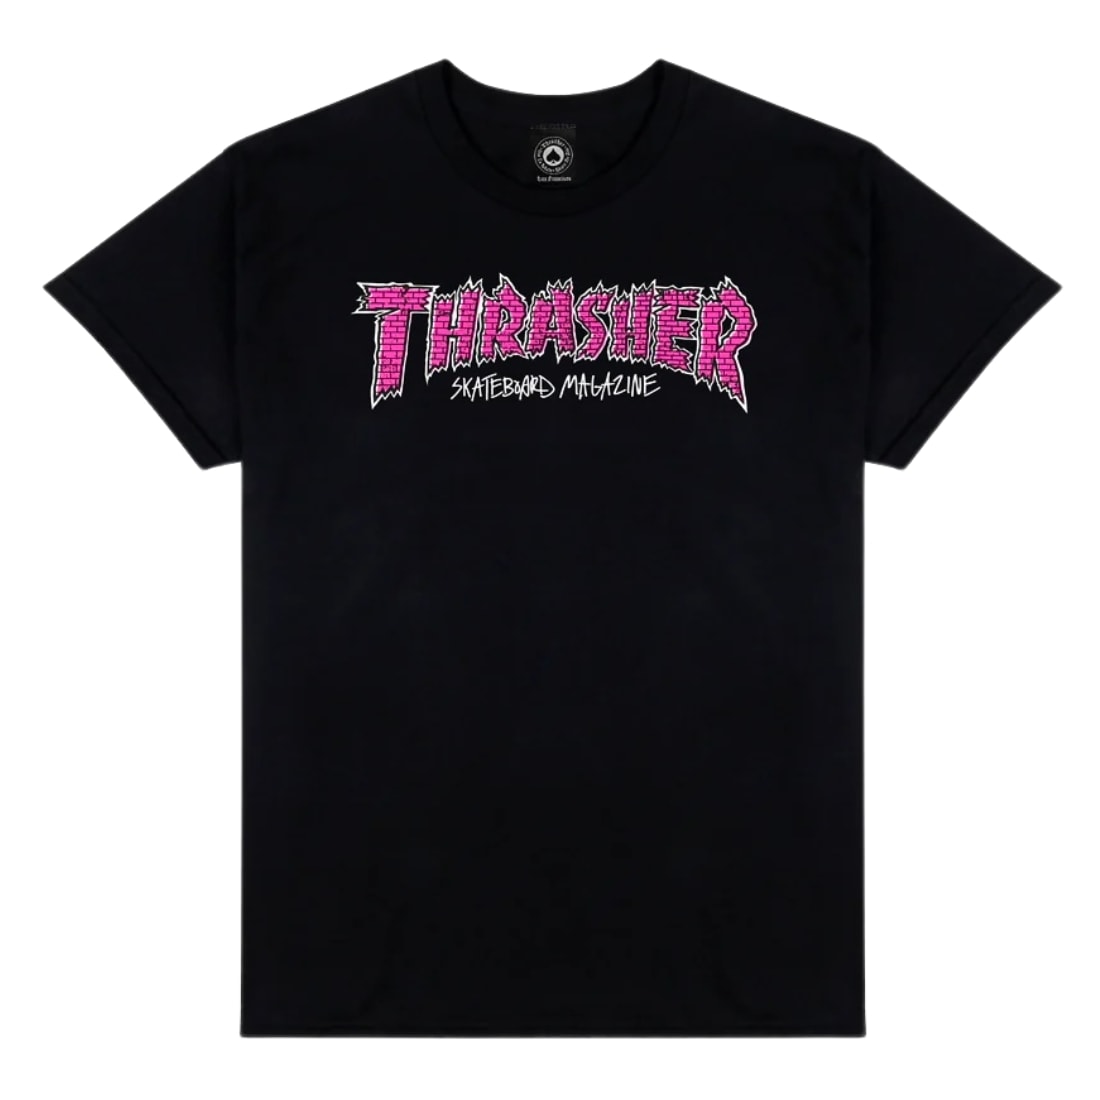 Thrasher Brick T-Shirt - Black/Pink - Mens Graphic T-Shirt by Thrasher